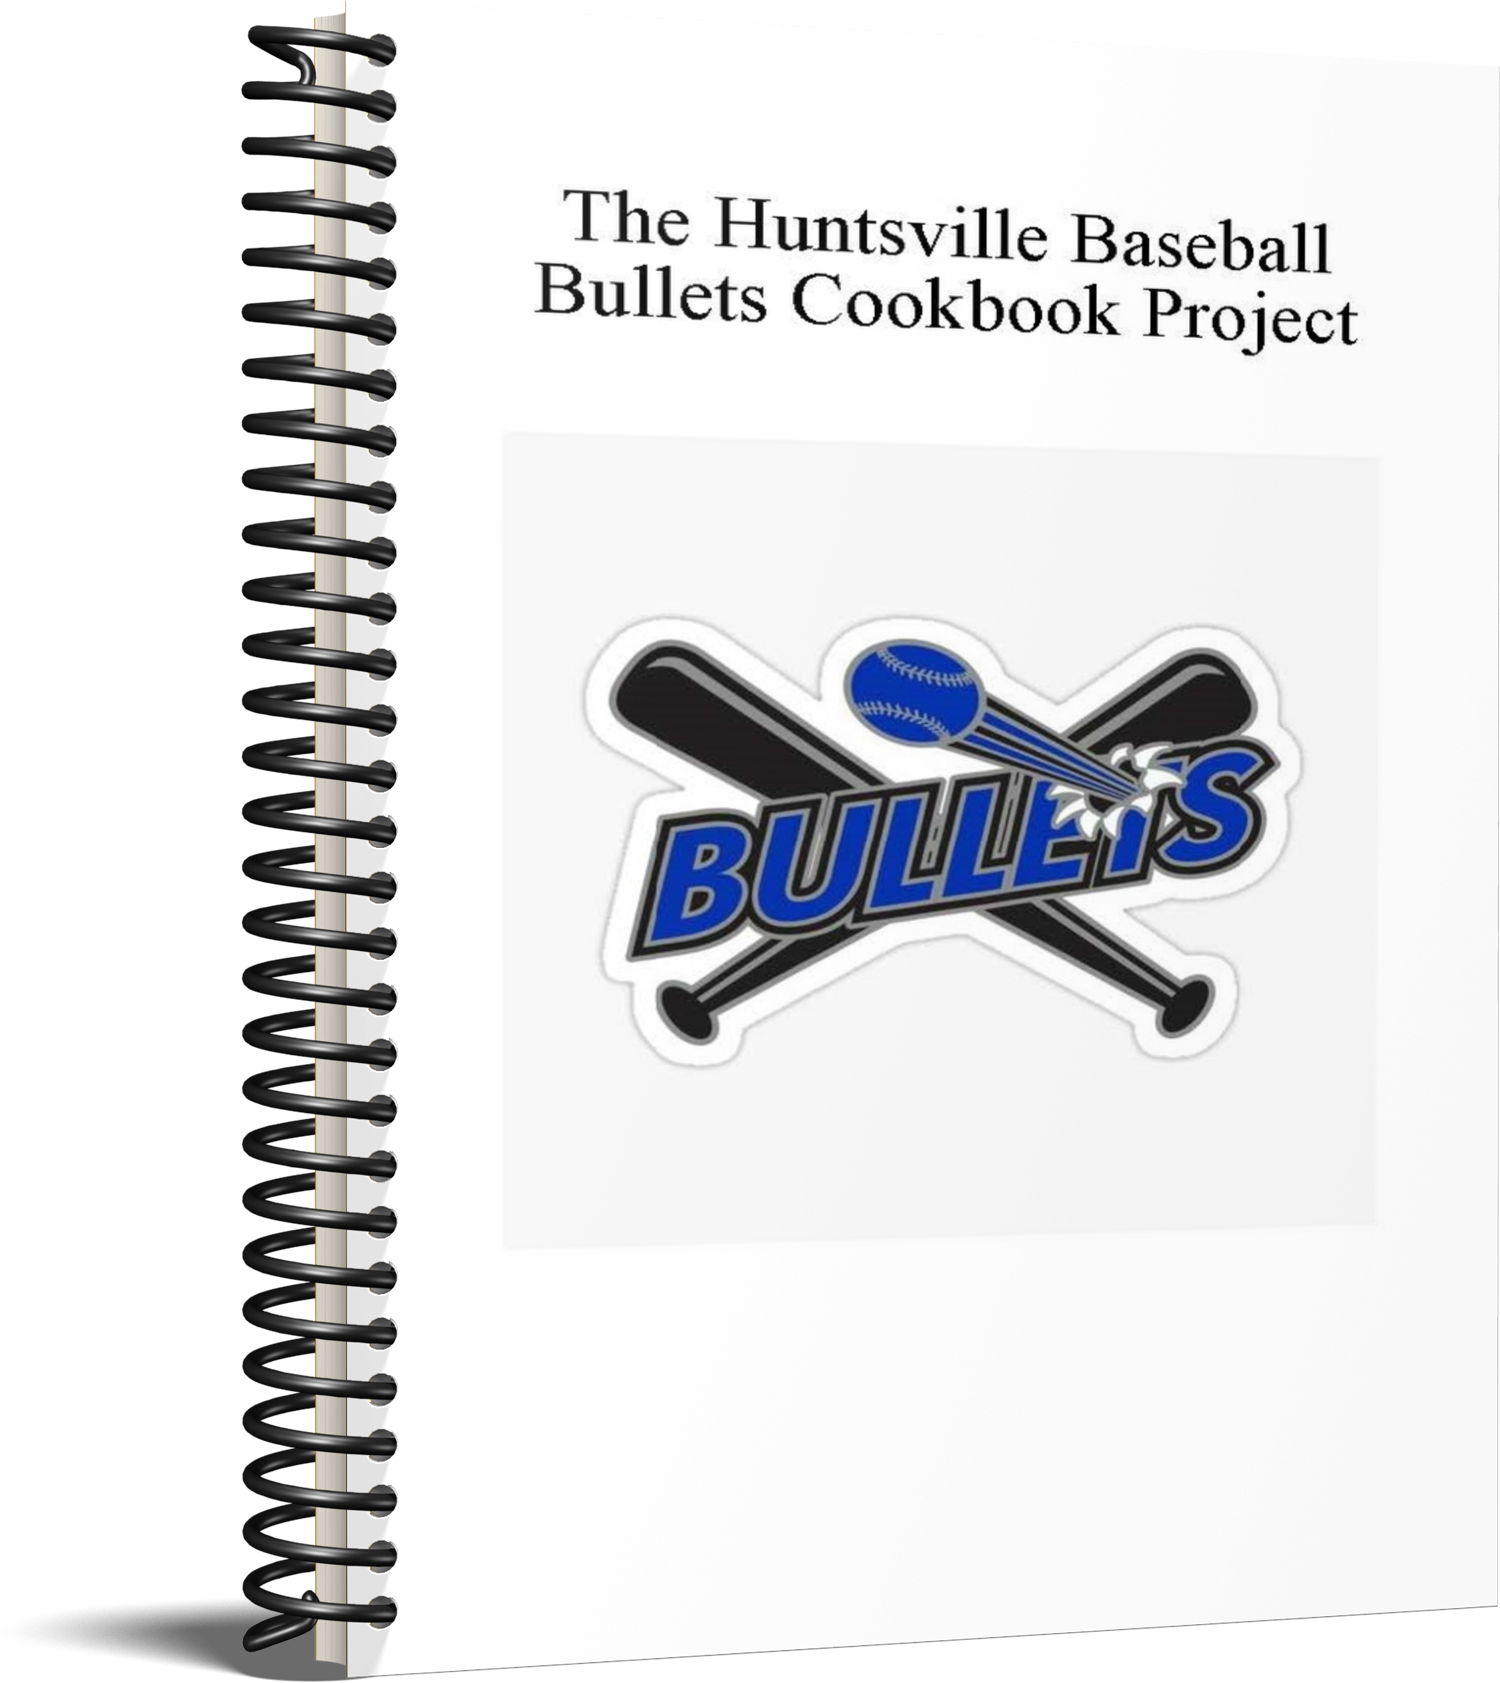 Baseball Team Fundraising Cookbook